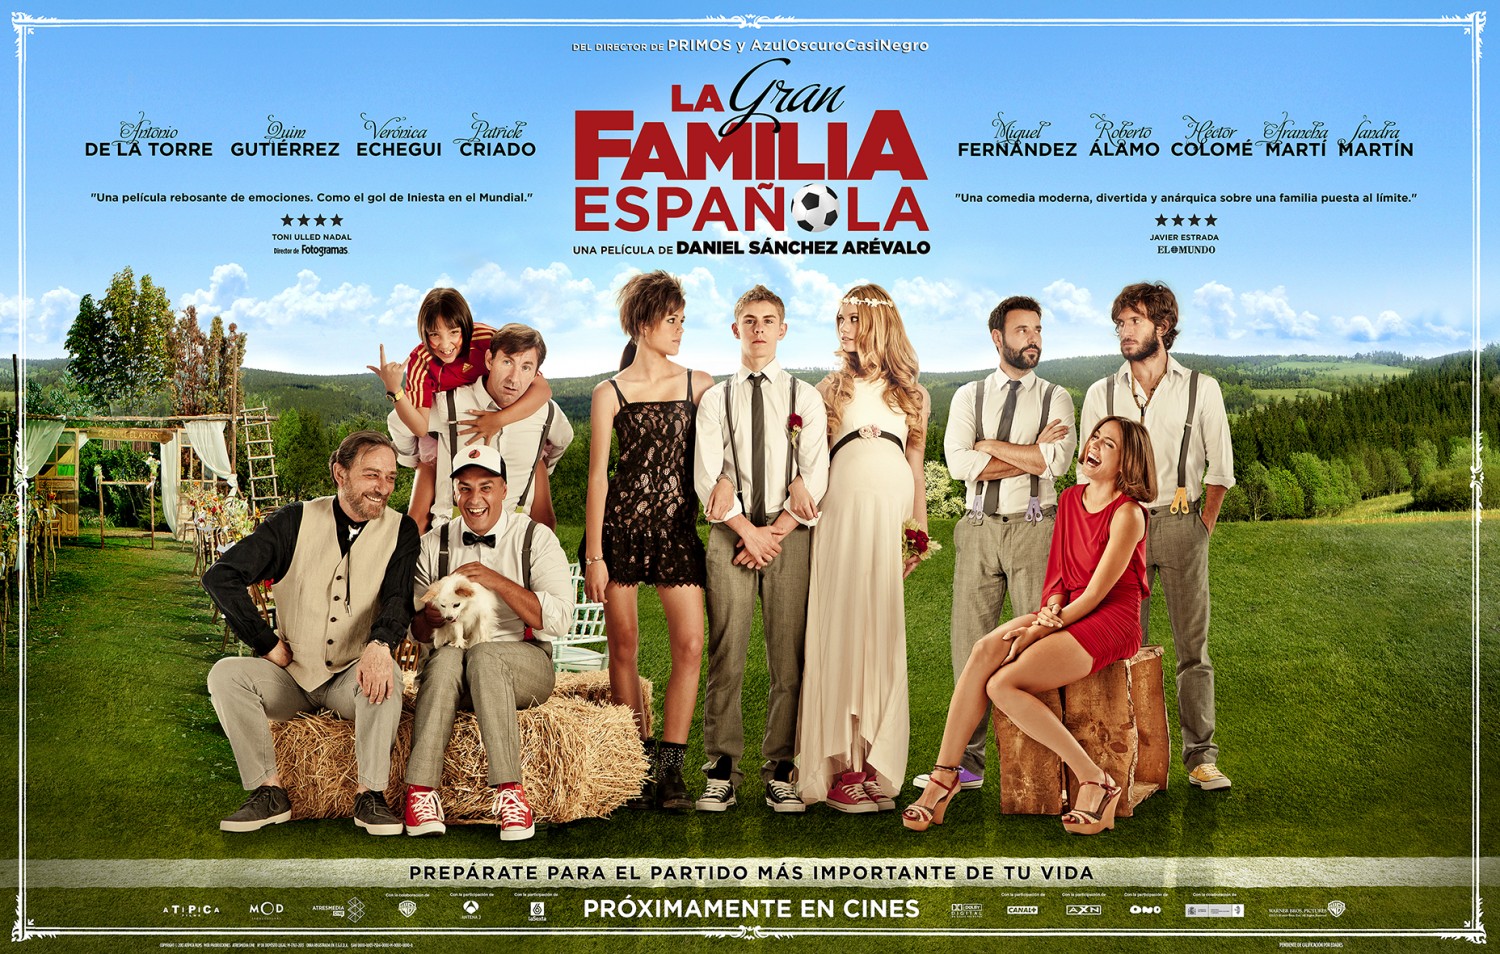 Extra Large Movie Poster Image for La gran familia española (#7 of 7)